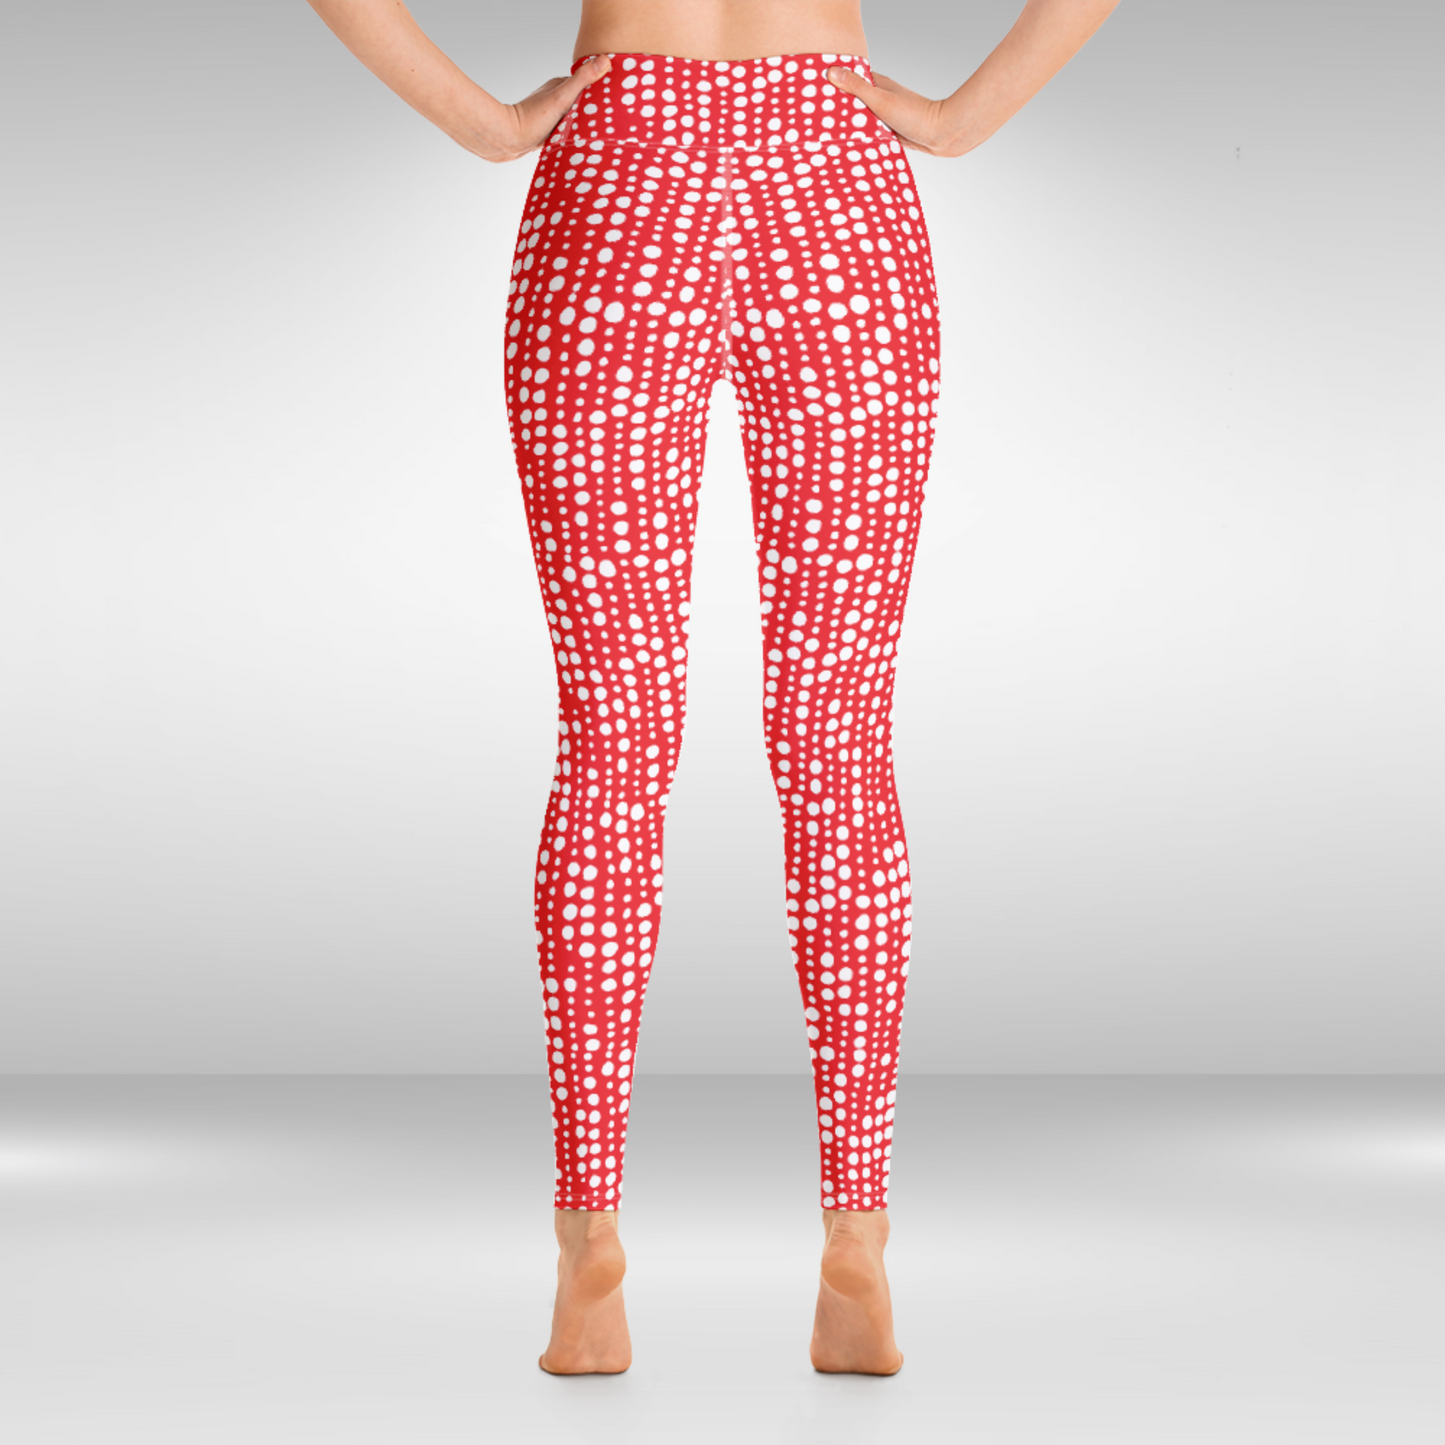 Women Yoga Legging - Red and White Polka Dots Print